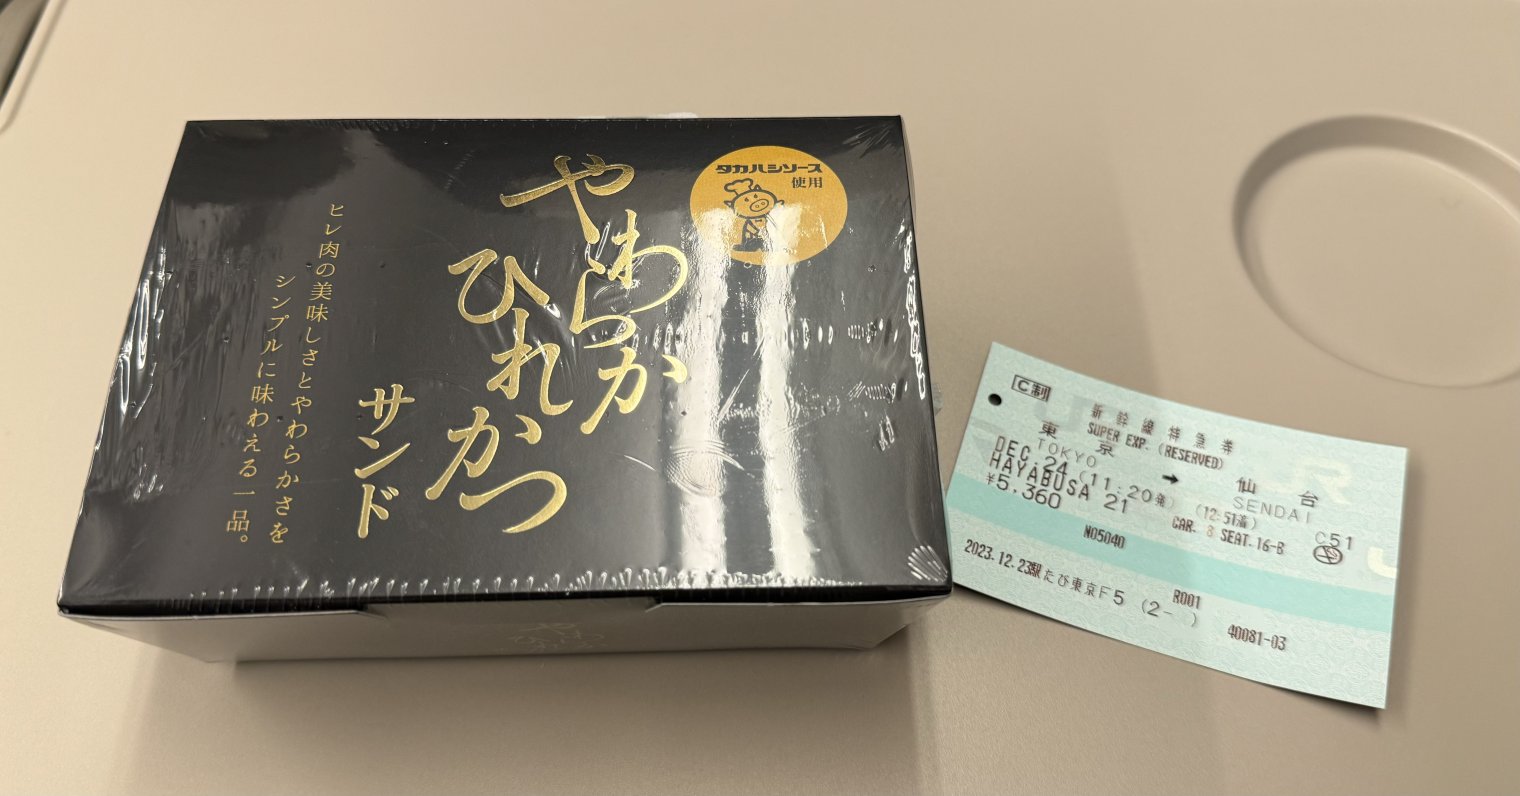 Pork cutlet sando and ticket to Sendai